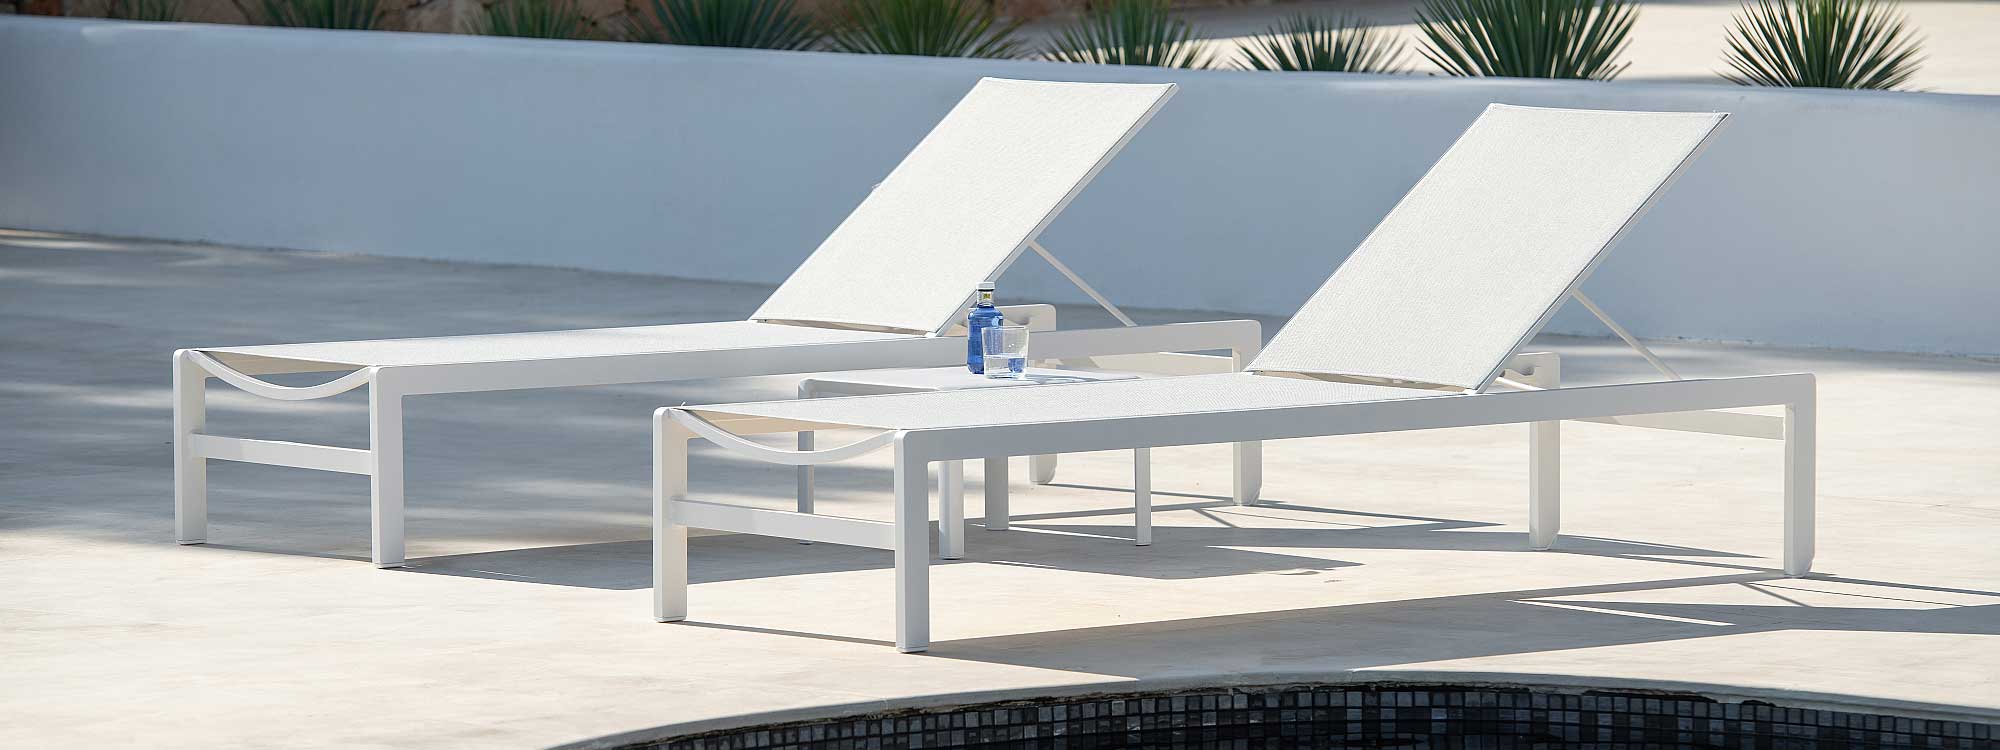 Image of pair of Sylt white aluminium sun loungers by Jati & Kebon on sunny poolside